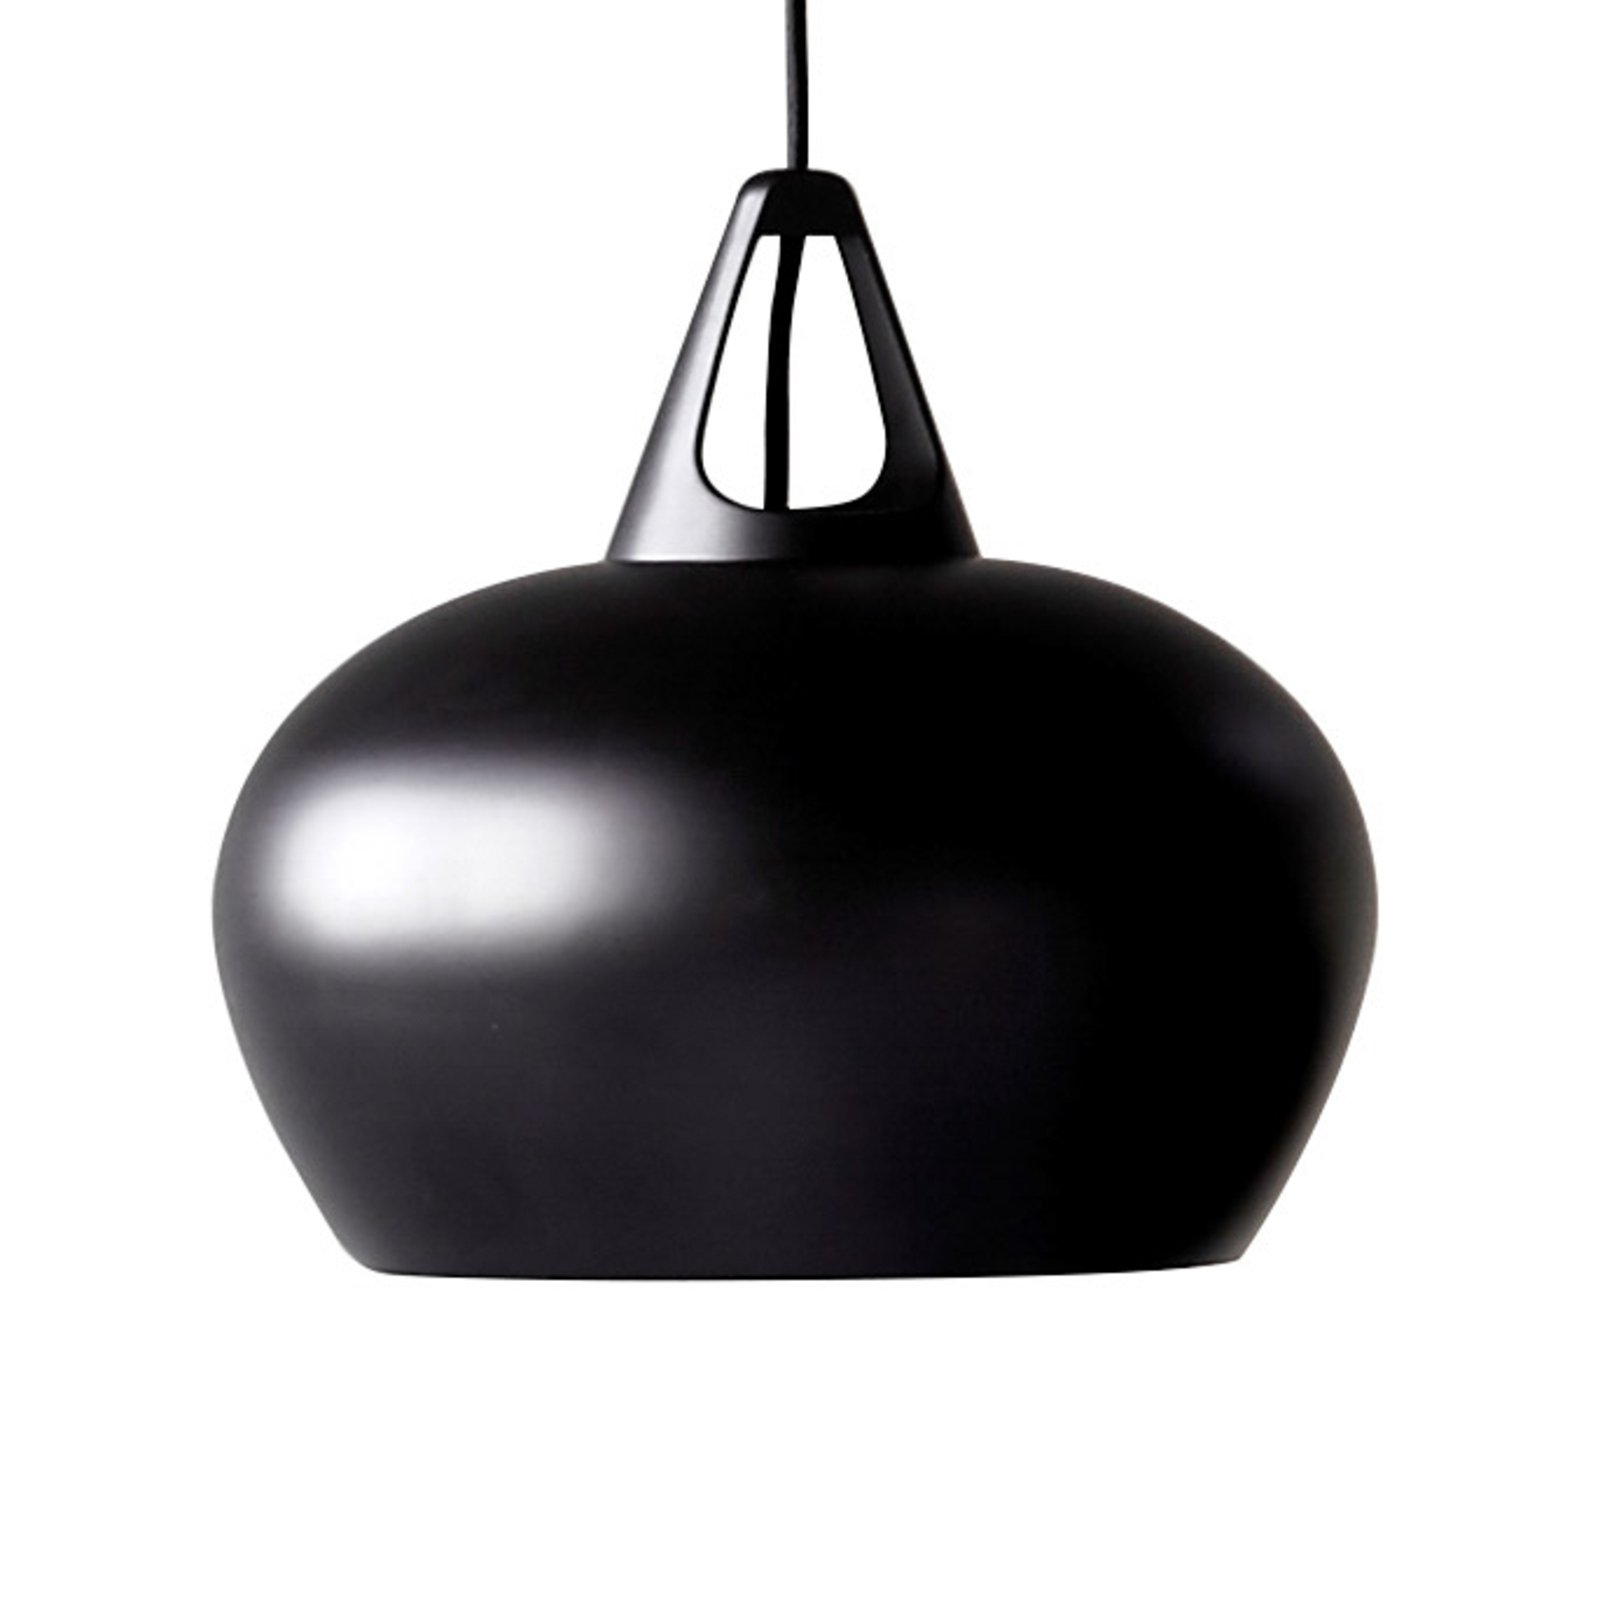 Effective Belly hanging light, 29 cm diameter